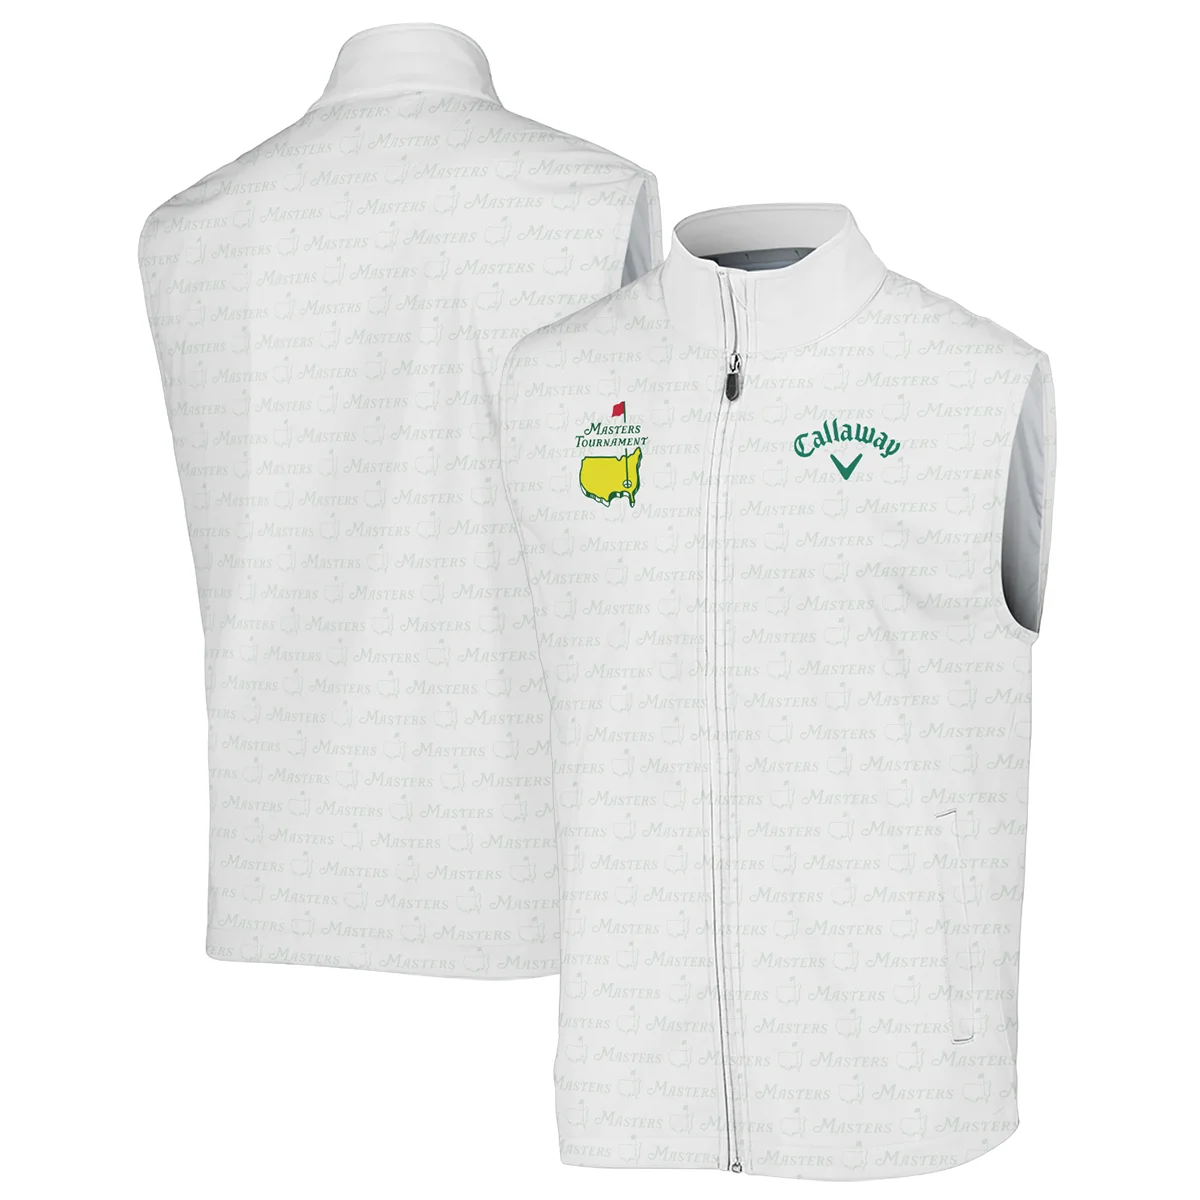 Pattern Masters Tournament Callaway Unisex Sweatshirt White Green Sport Love Clothing Sweatshirt